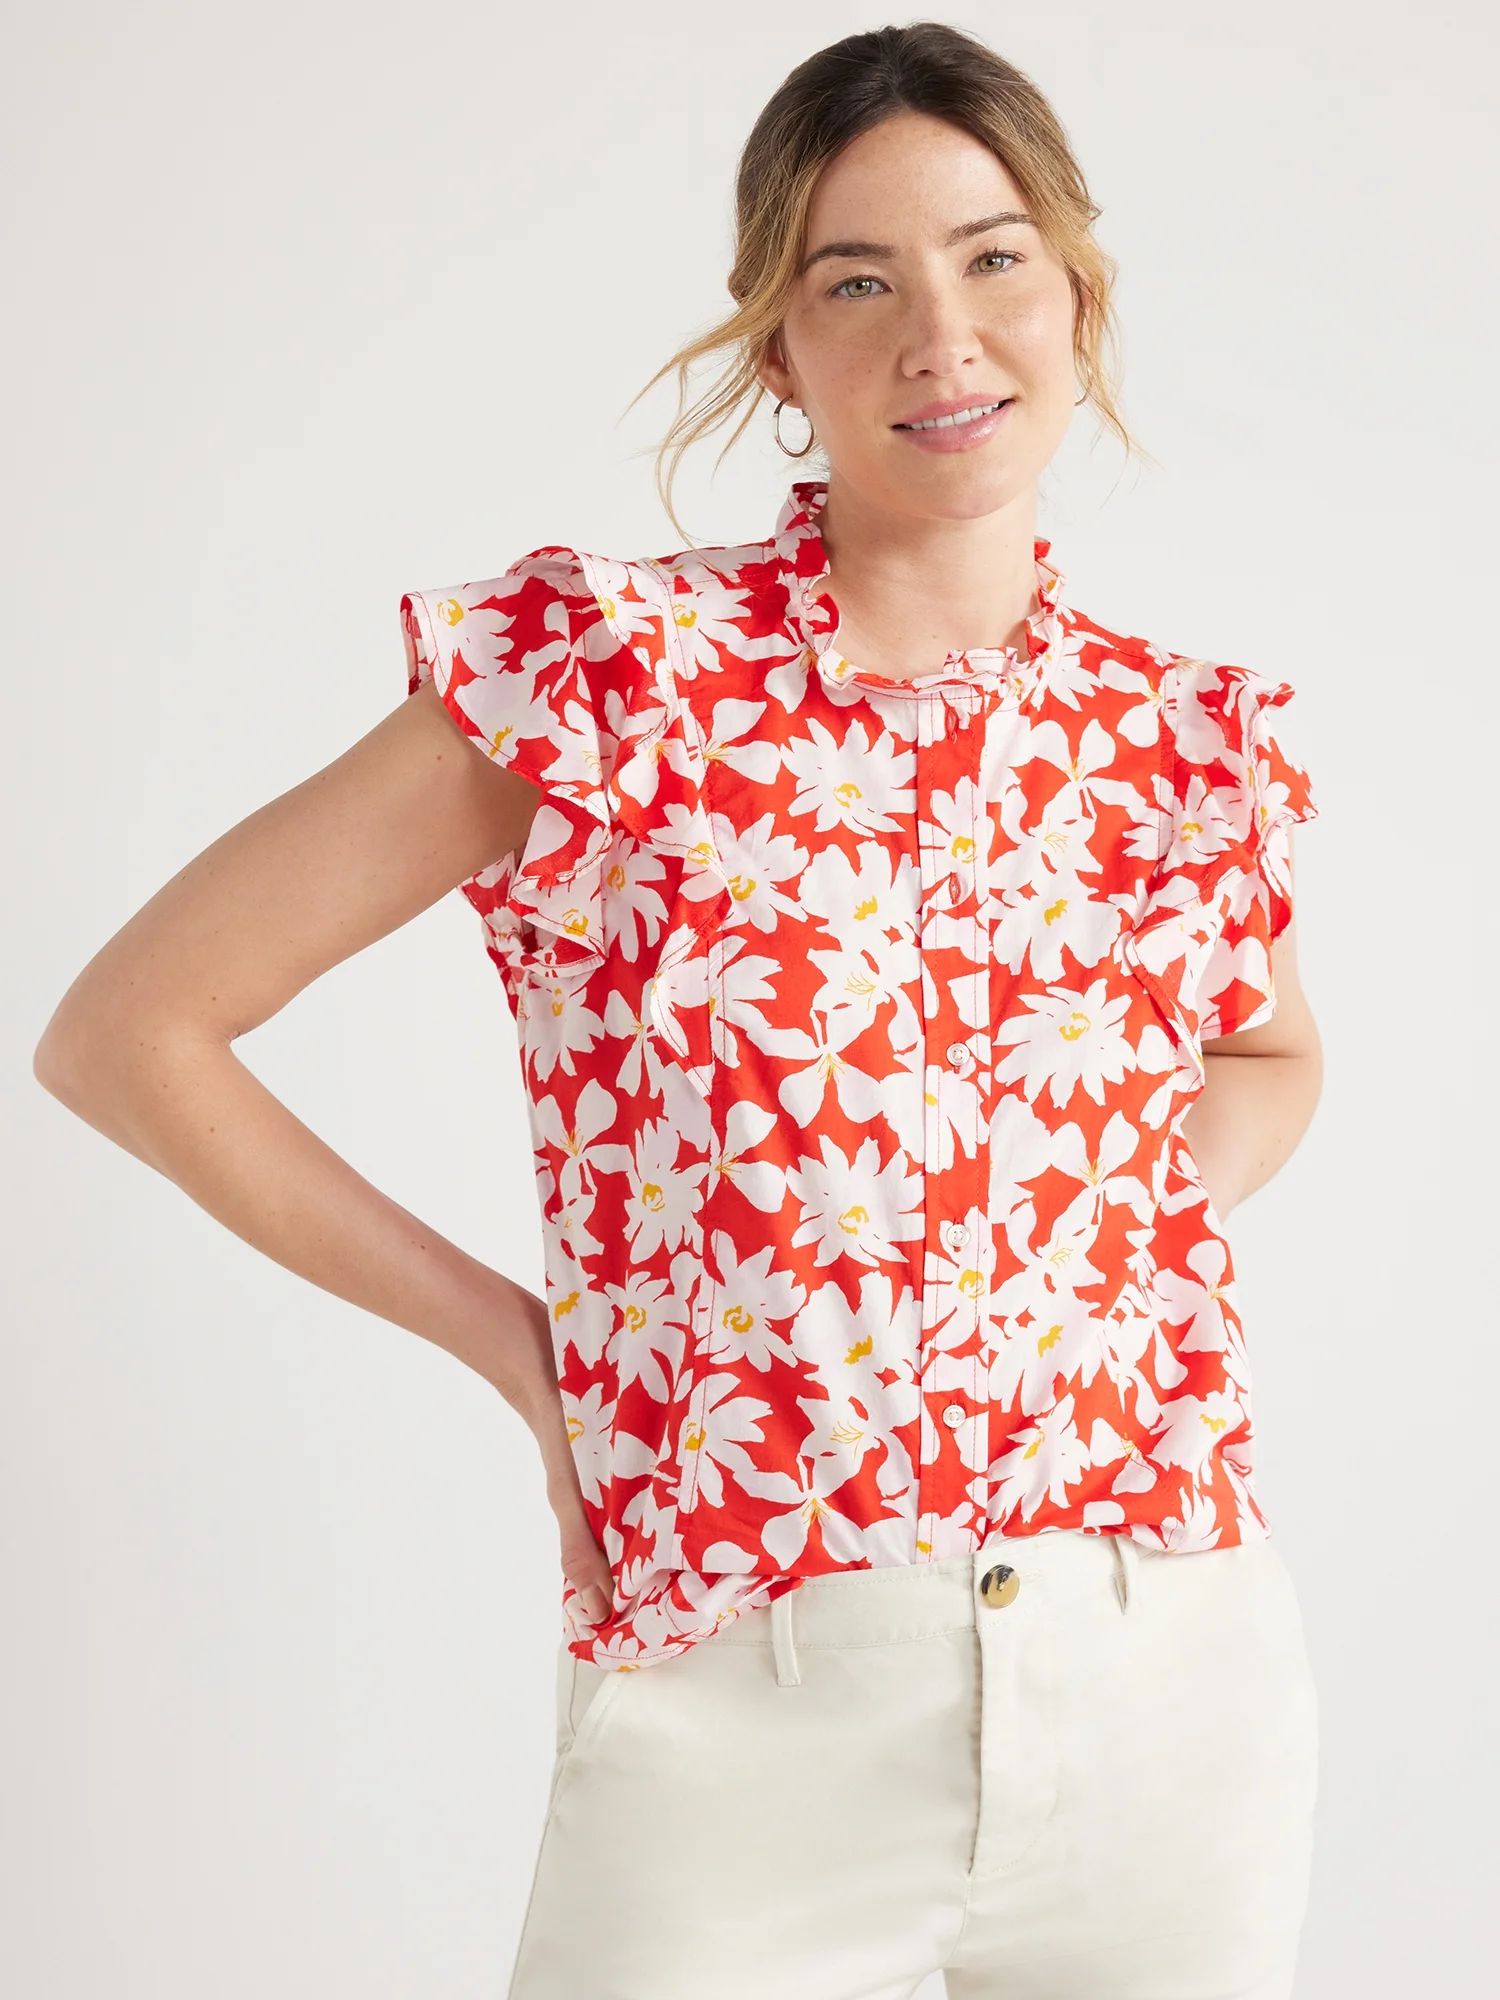 Free Assembly Women’s Cotton Ruffle Shirt with Short Sleeves, Sizes XS-XXL | Walmart (US)